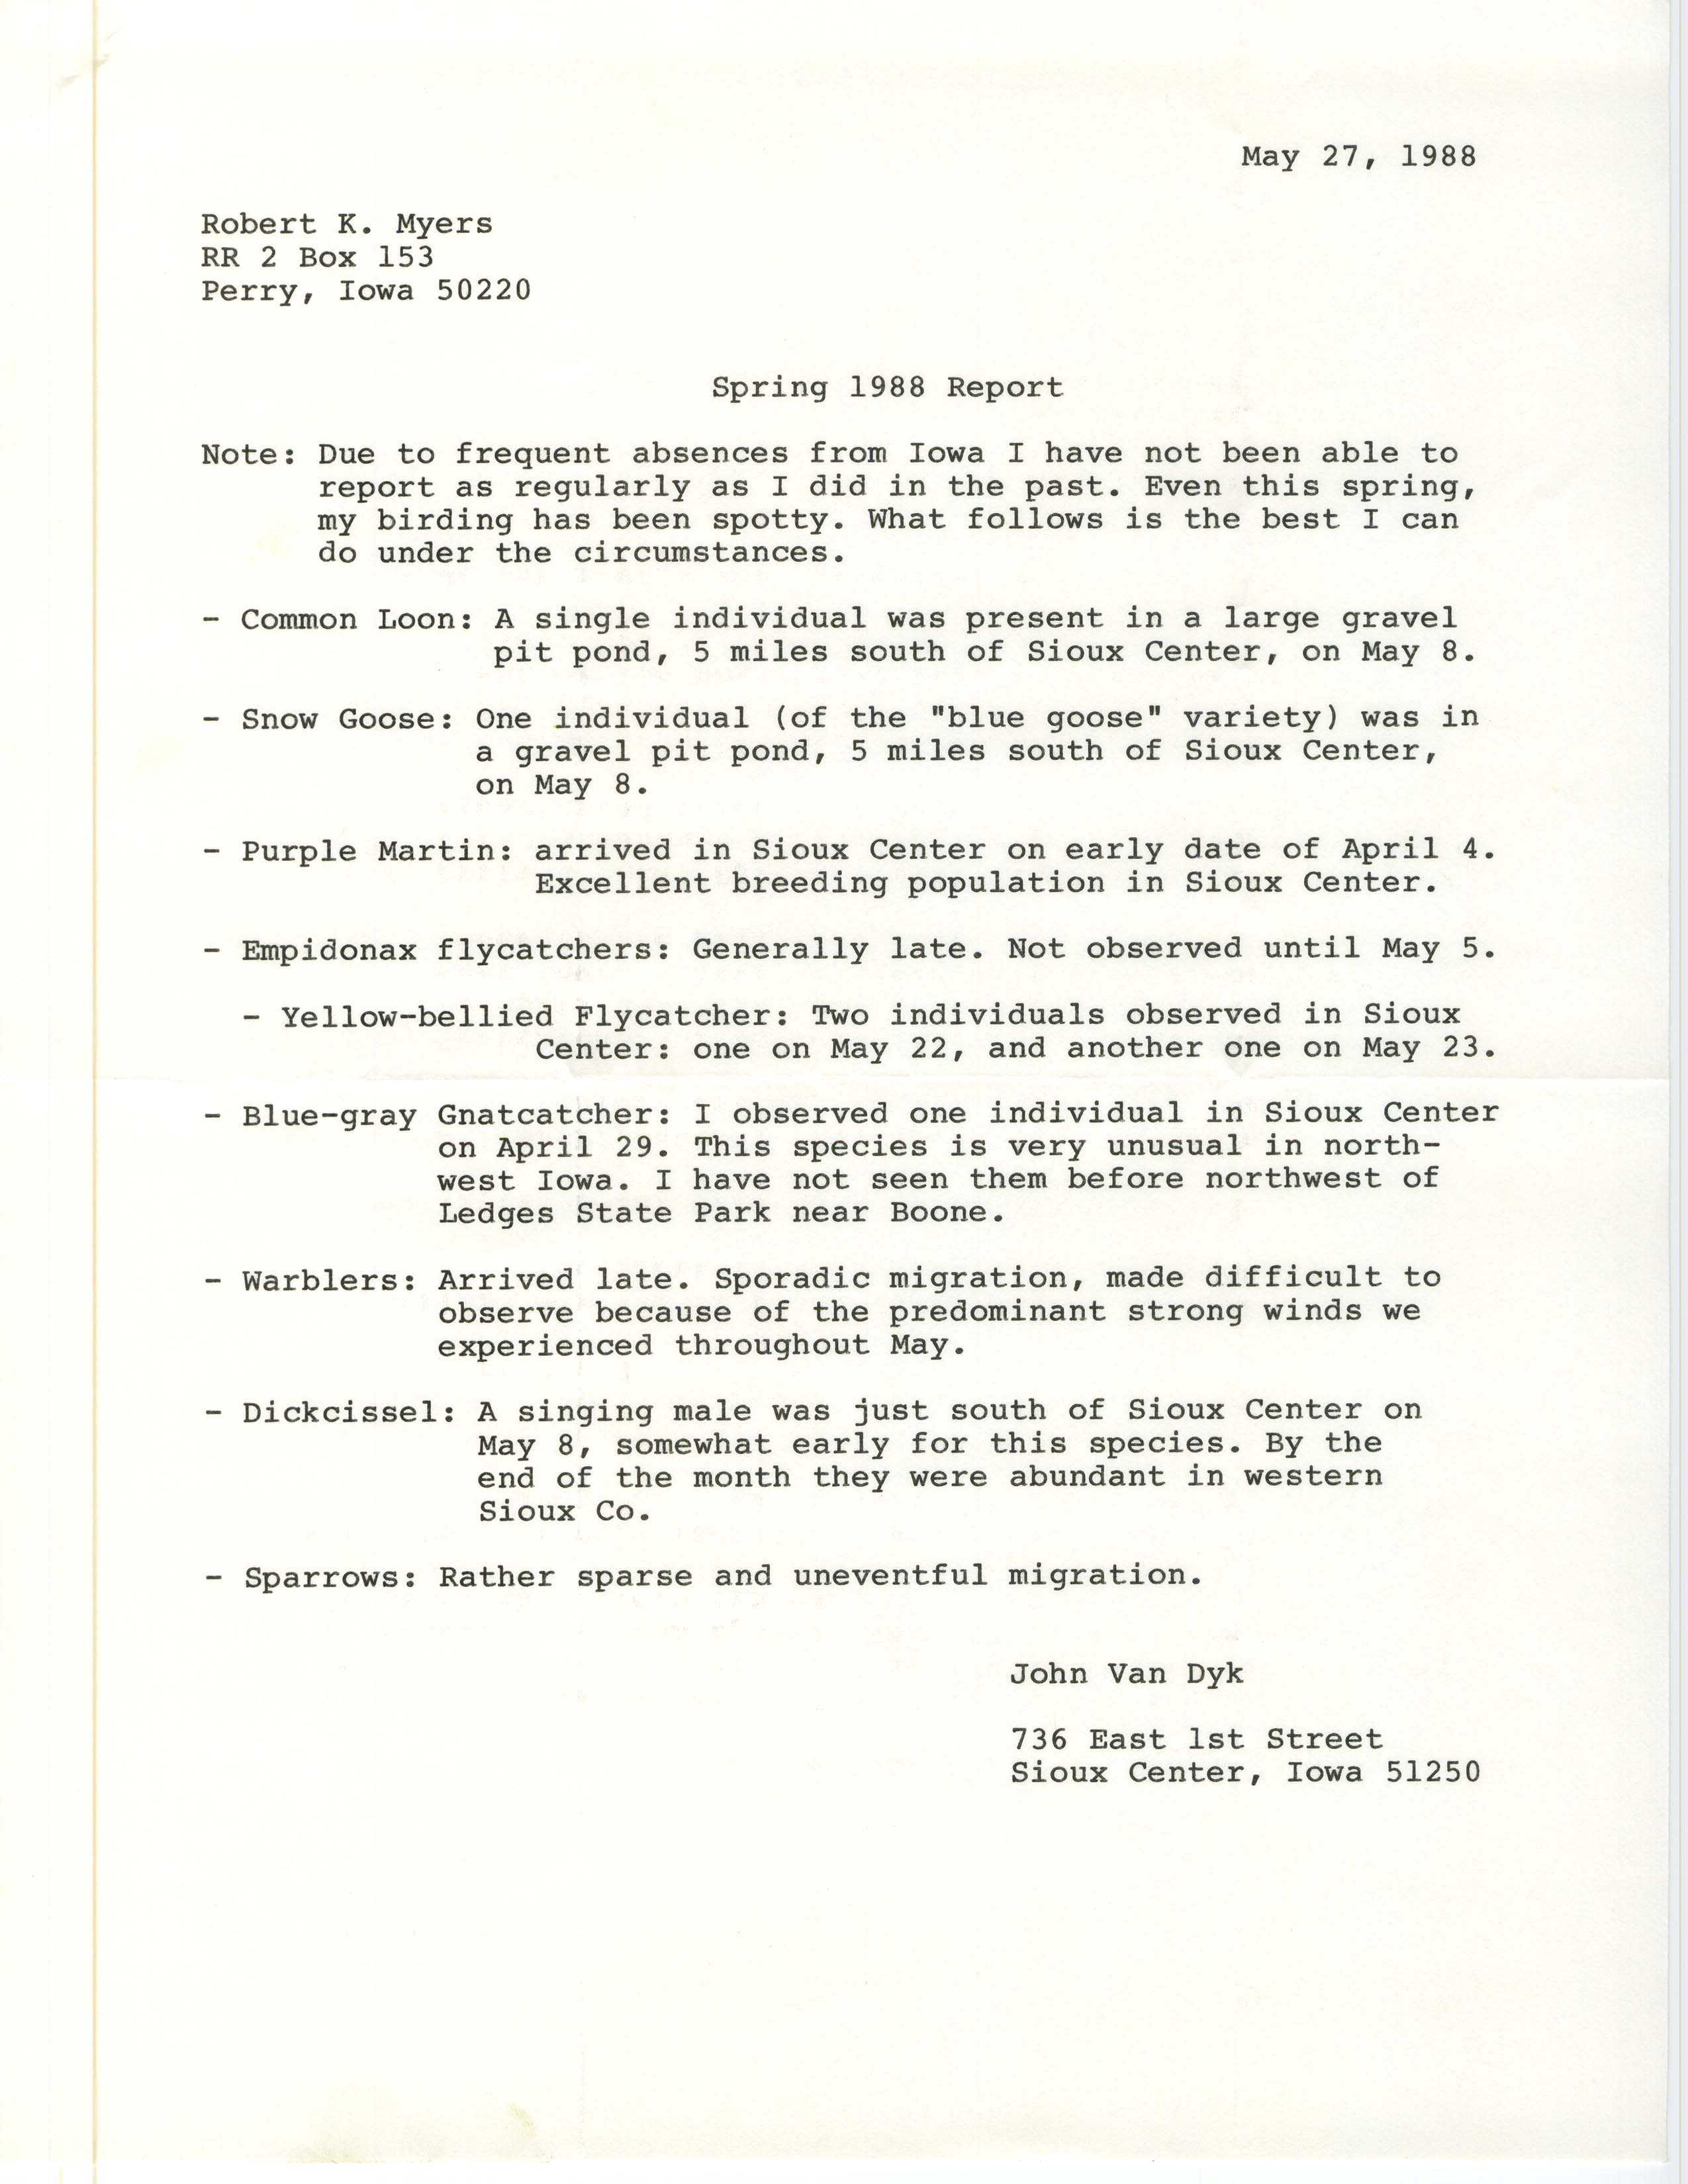 John Van Dyk letter to Robert K. Myers regarding bird sightings, May 27, 1988